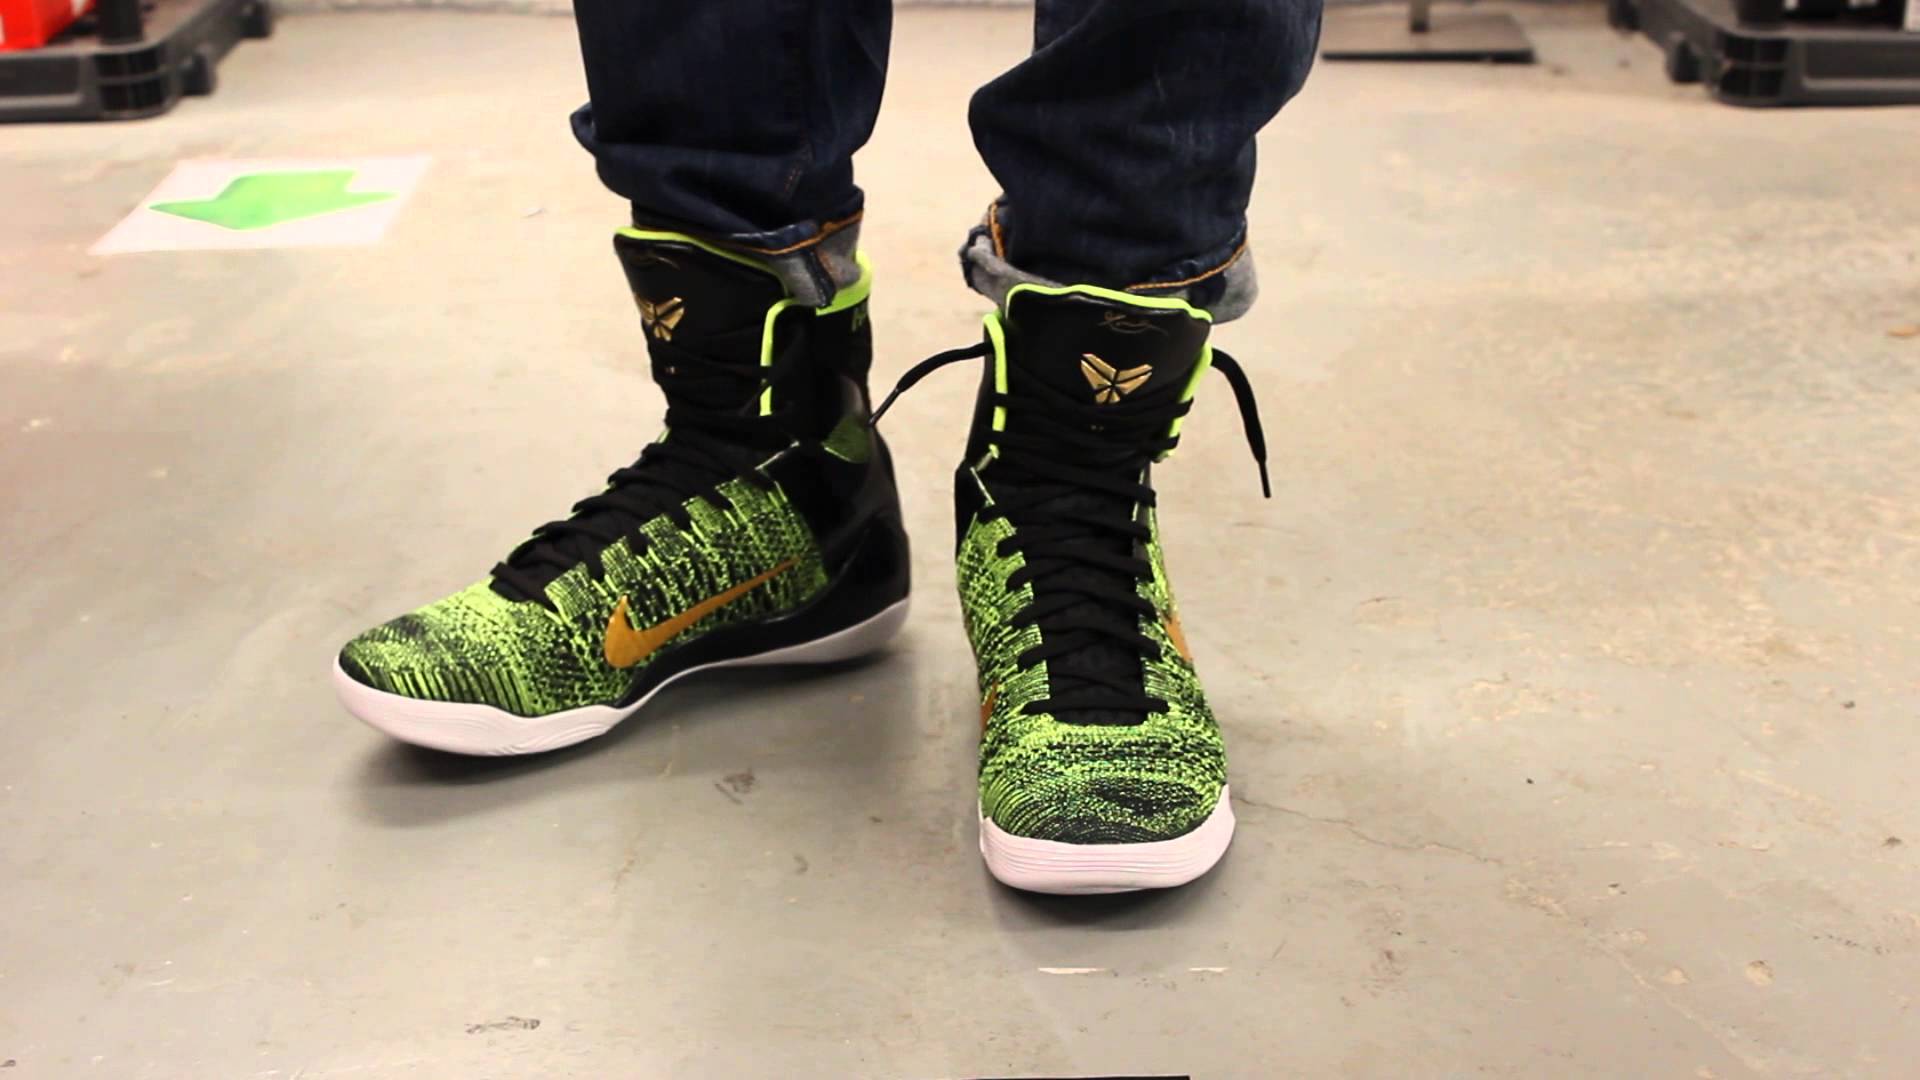 Nike Kobe IX Elite Restored On Feet Video